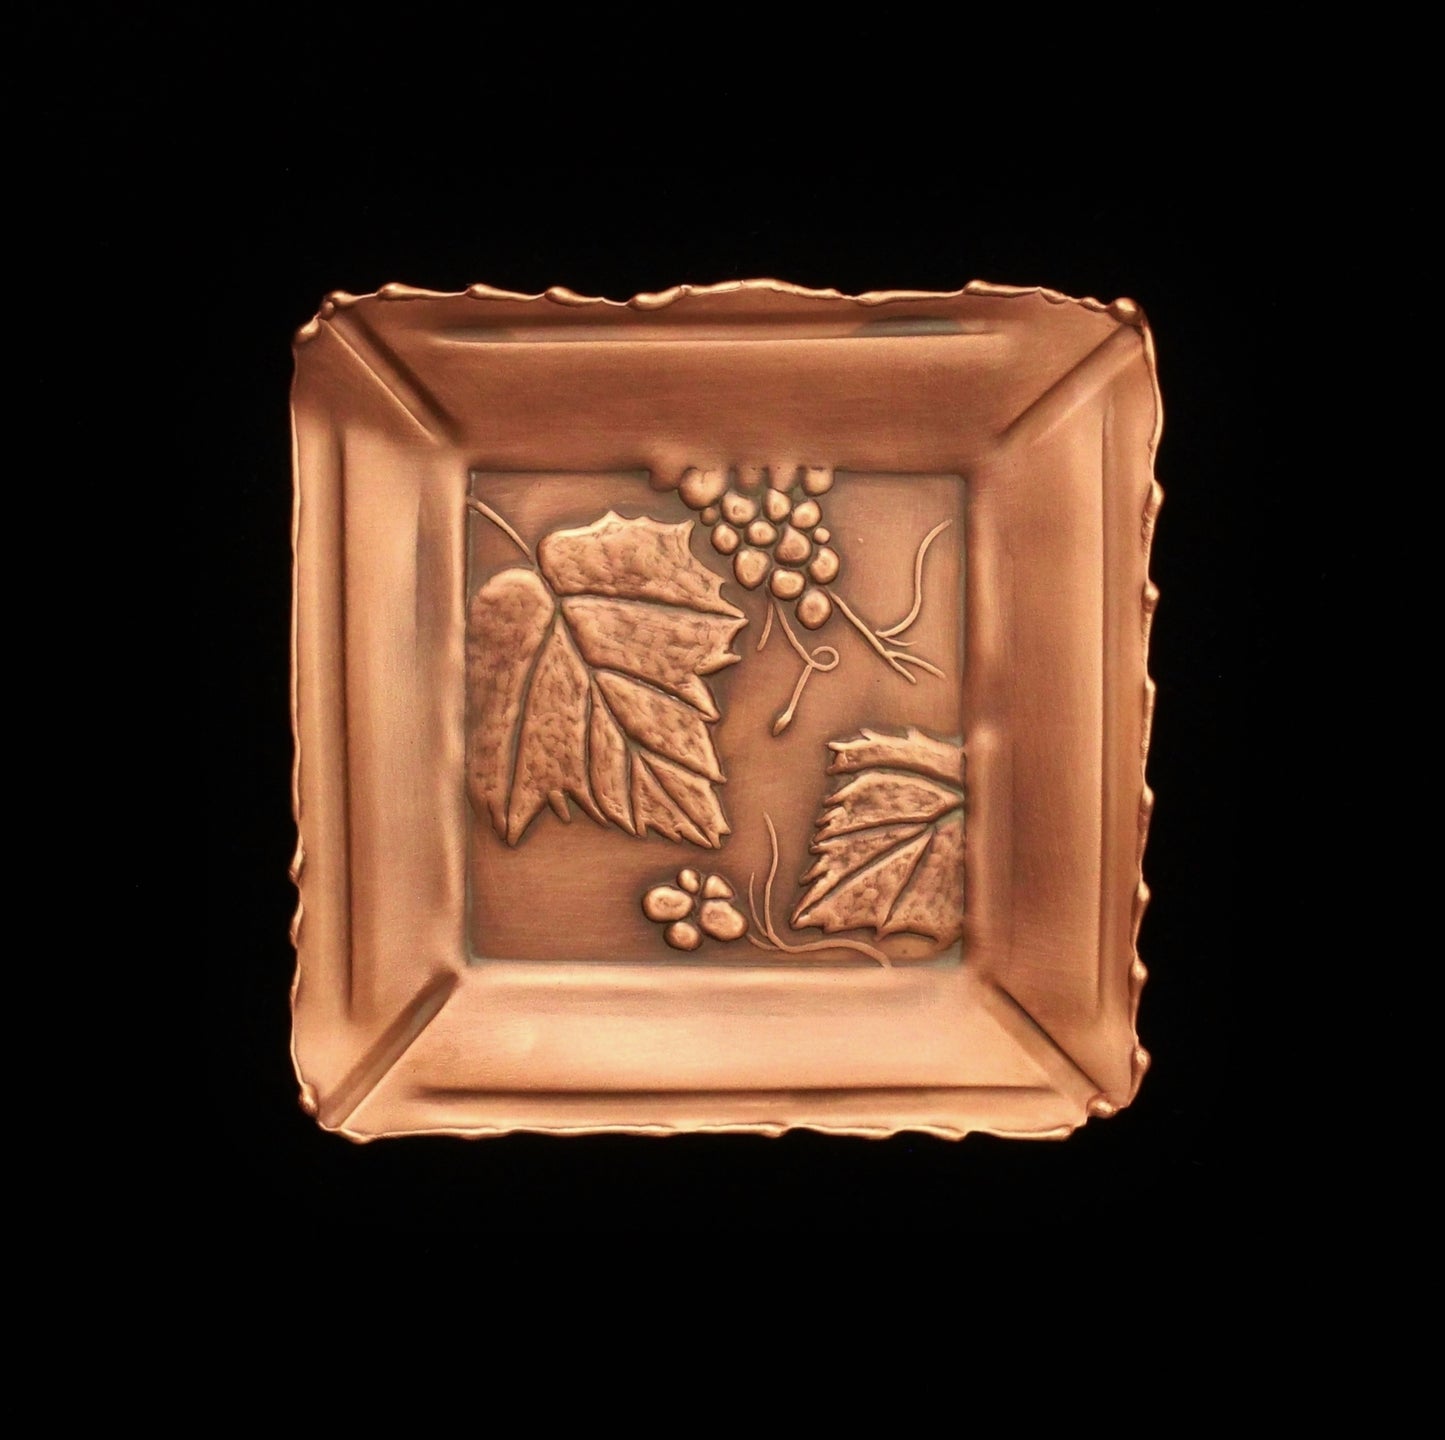 Vineyard Art Tile/Tray, Copper, 4" x 4"